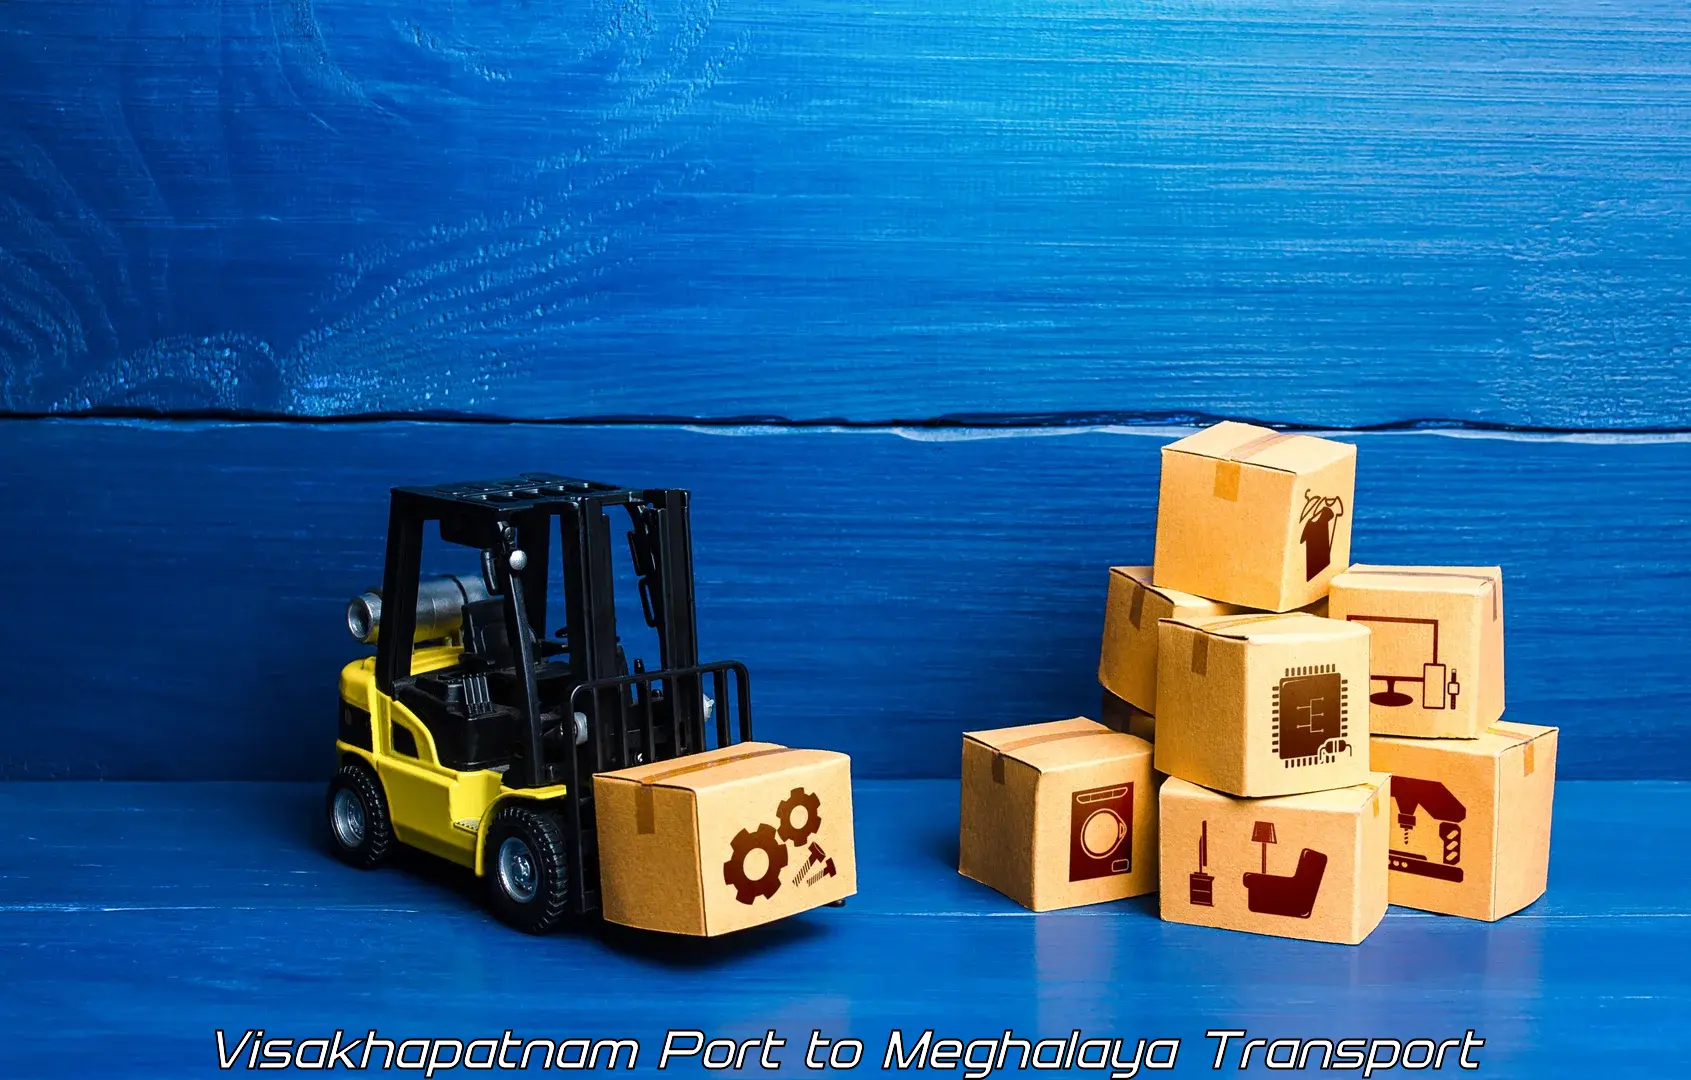 Transport in sharing in Visakhapatnam Port to Meghalaya